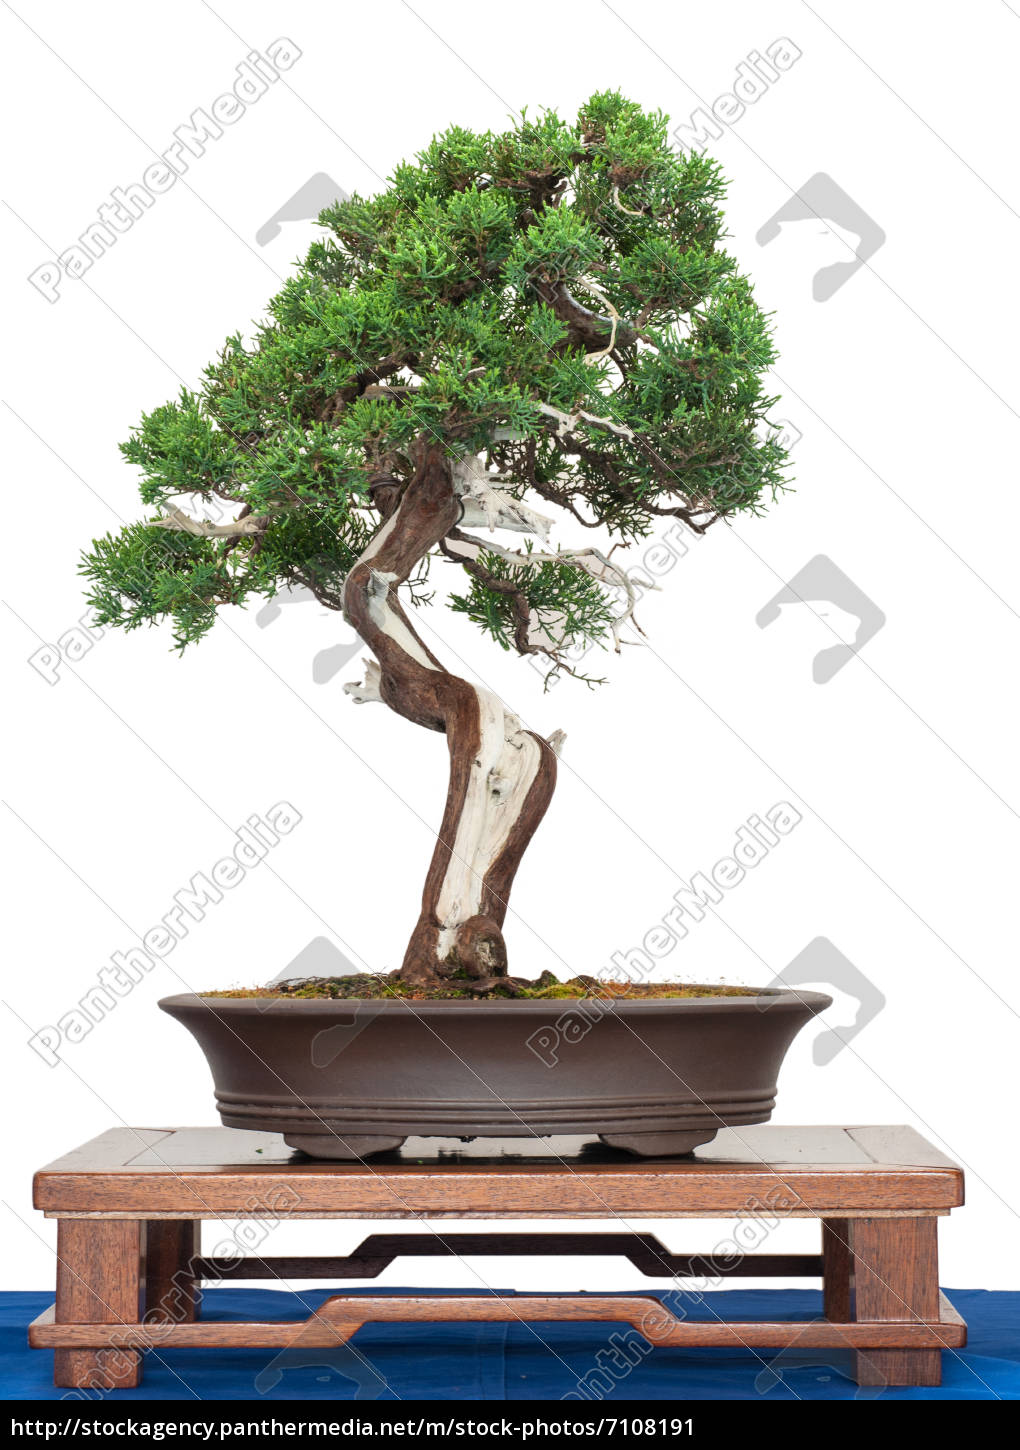 Chinese Juniper As Bonsai Tree Royalty Free Image 7108191 Panthermedia Stock Agency